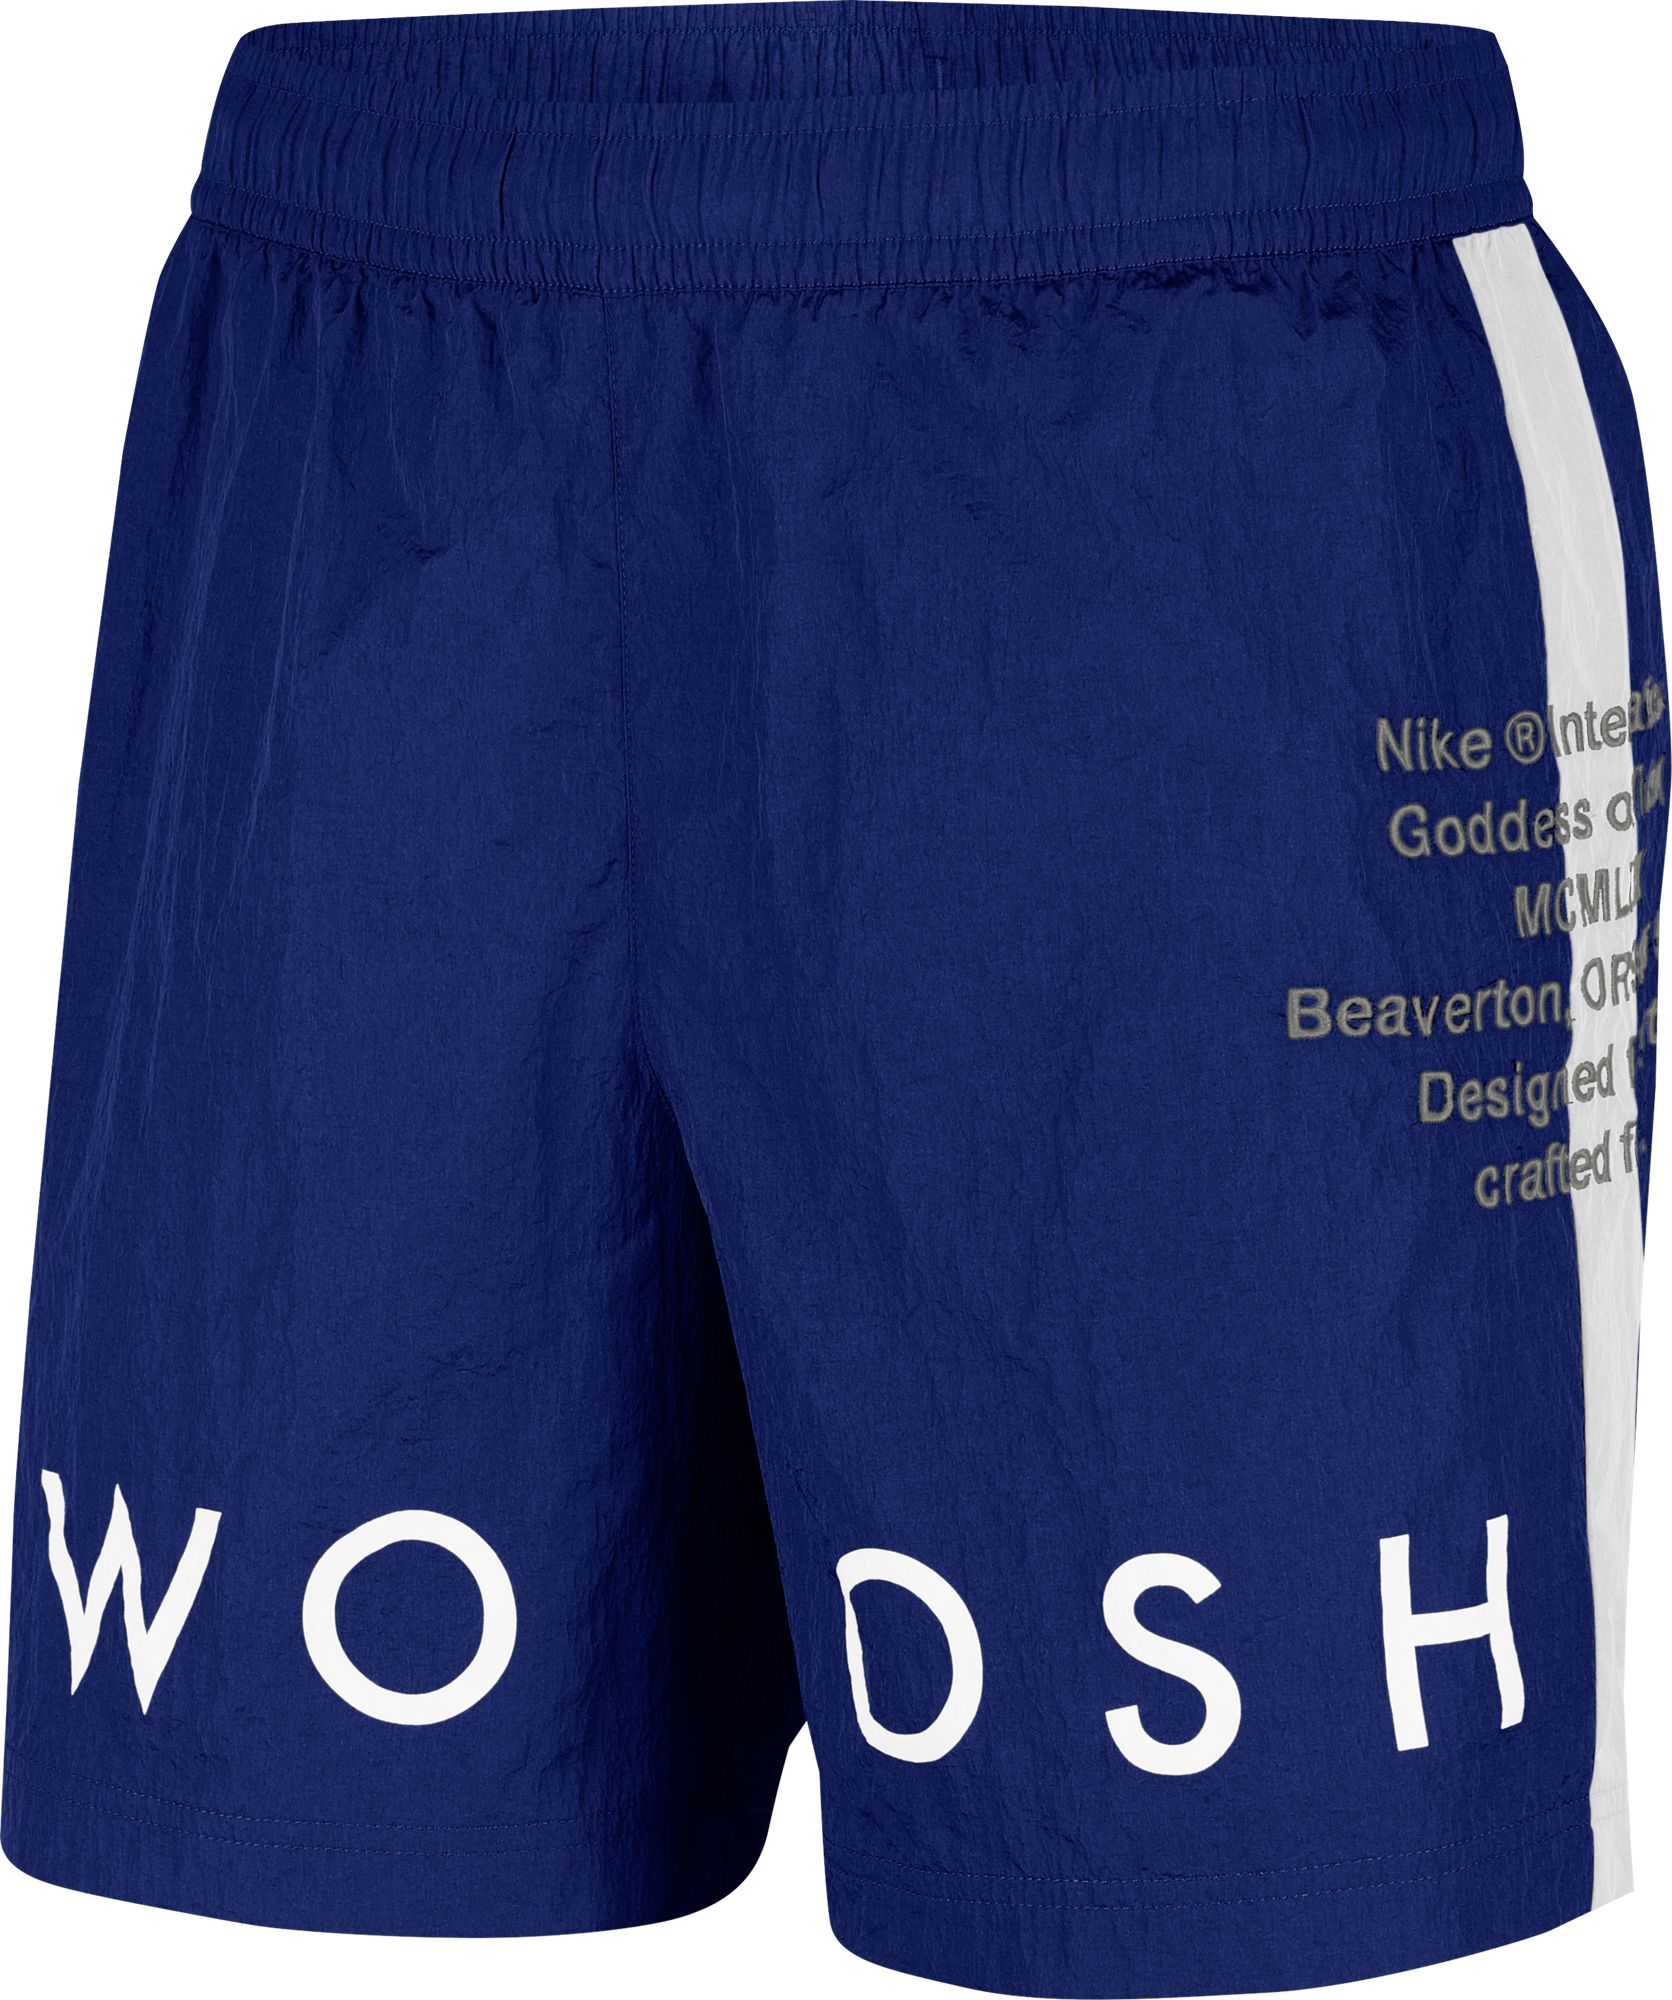 nike swoosh shorts blue